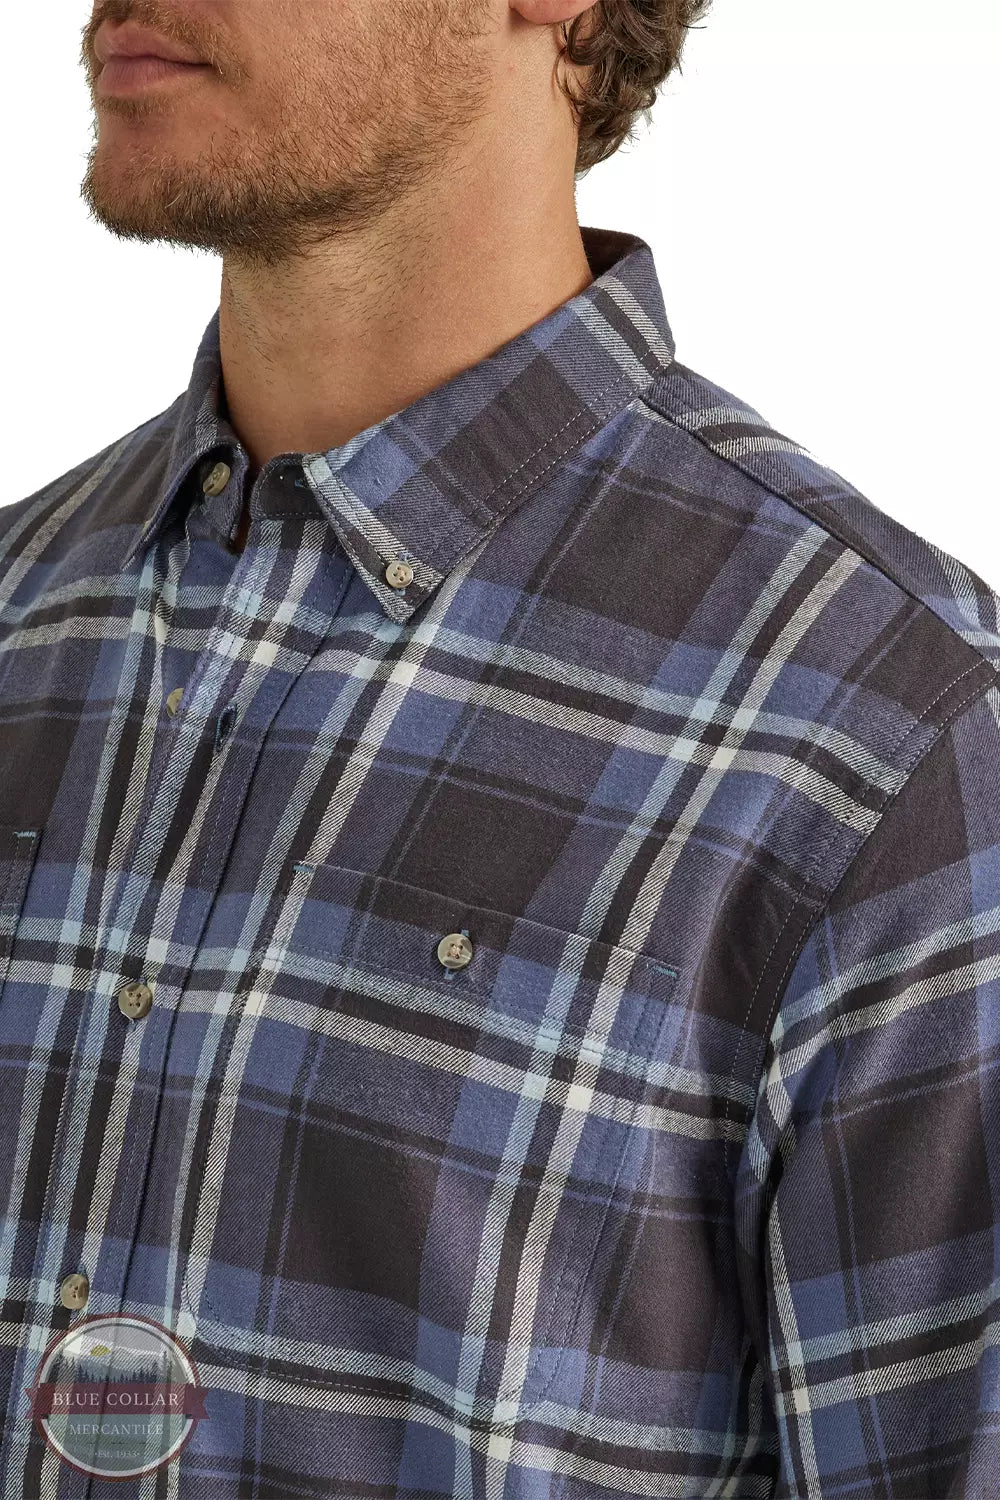 Wrangler 112330380 Rugged Wear Button Down Flannel Shirt in Navy Indigo Detail View